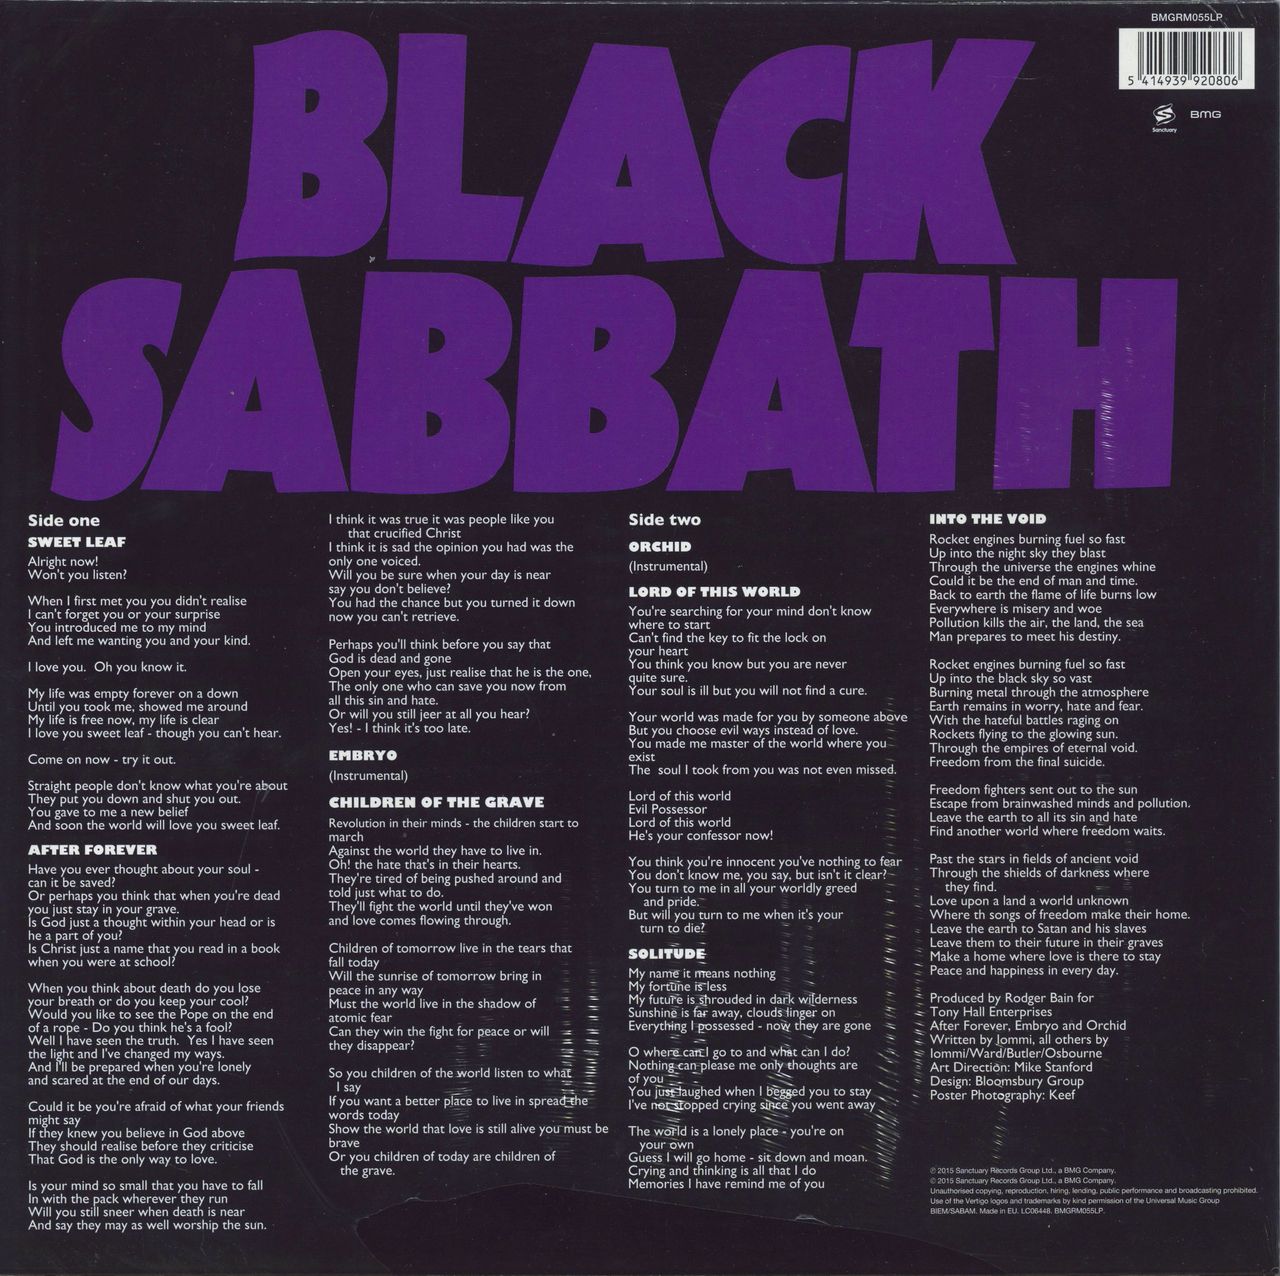 Black Sabbath - Vinilo Master Of Reality